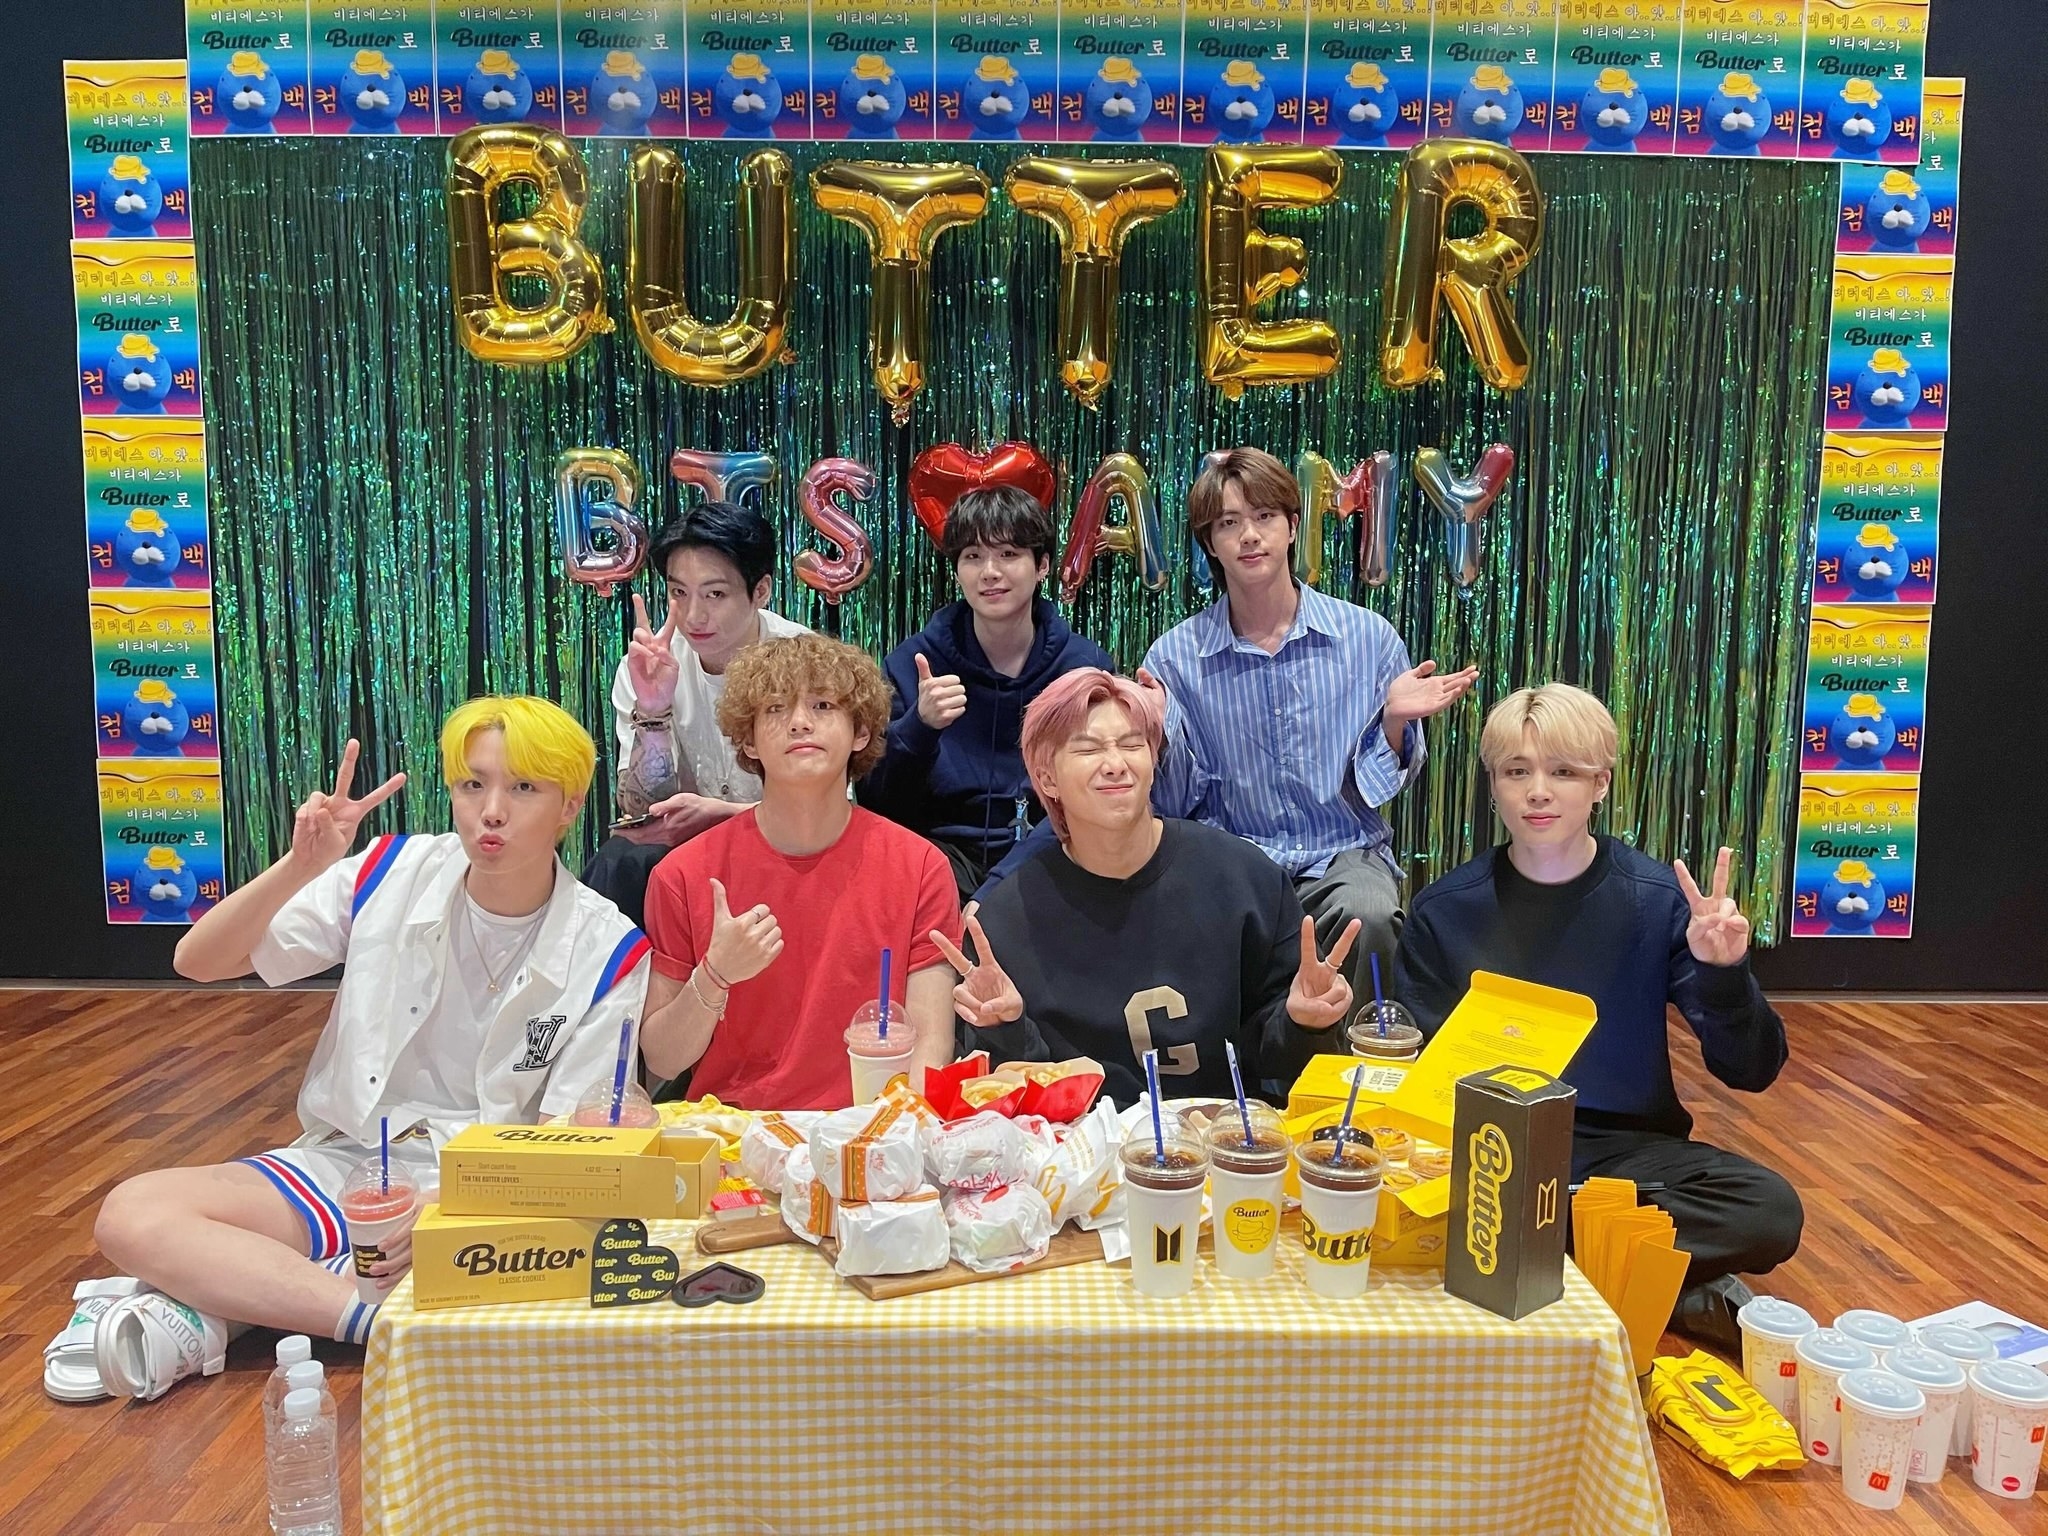 BTS Butter Concept Photos Featuring Blue Hair - wide 5